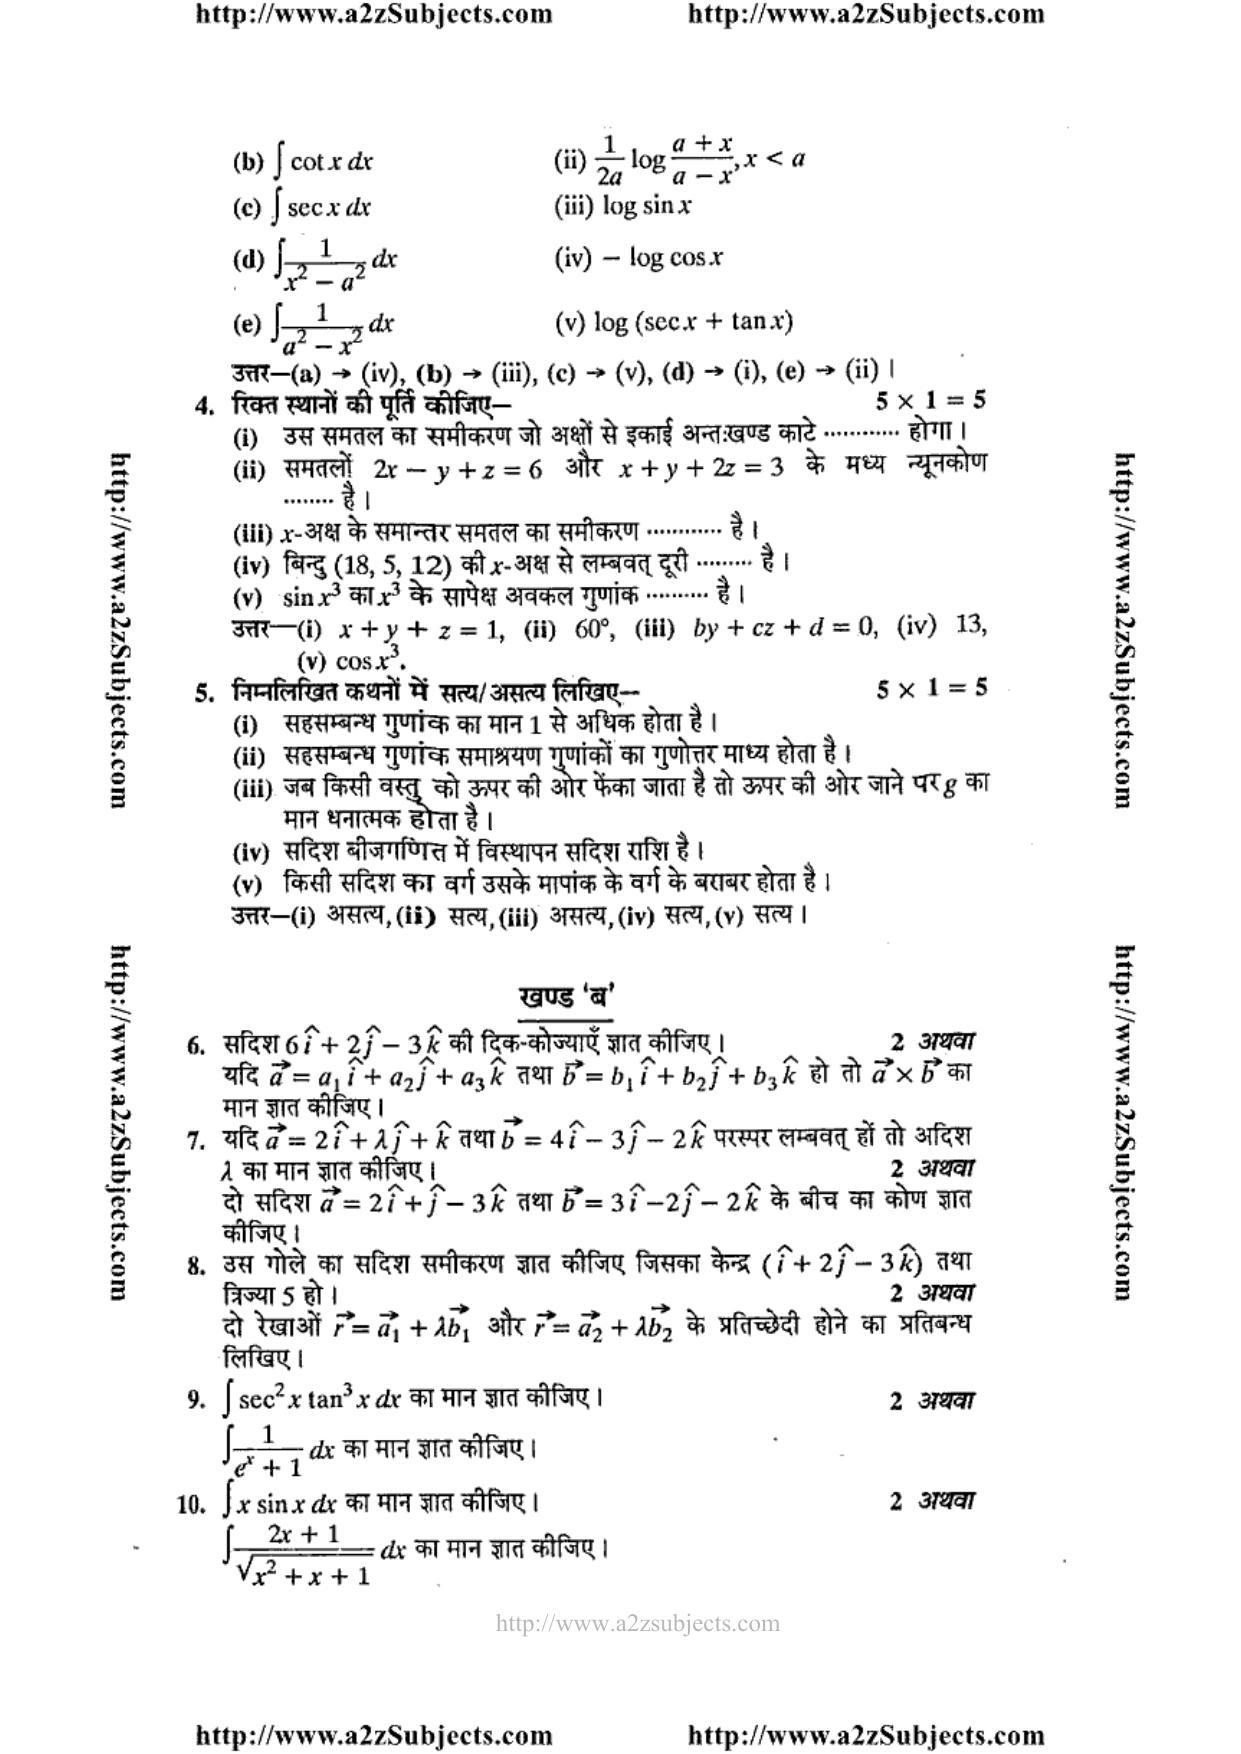 MP Board Class 12 Mathematica 2016 Question Paper - Page 2